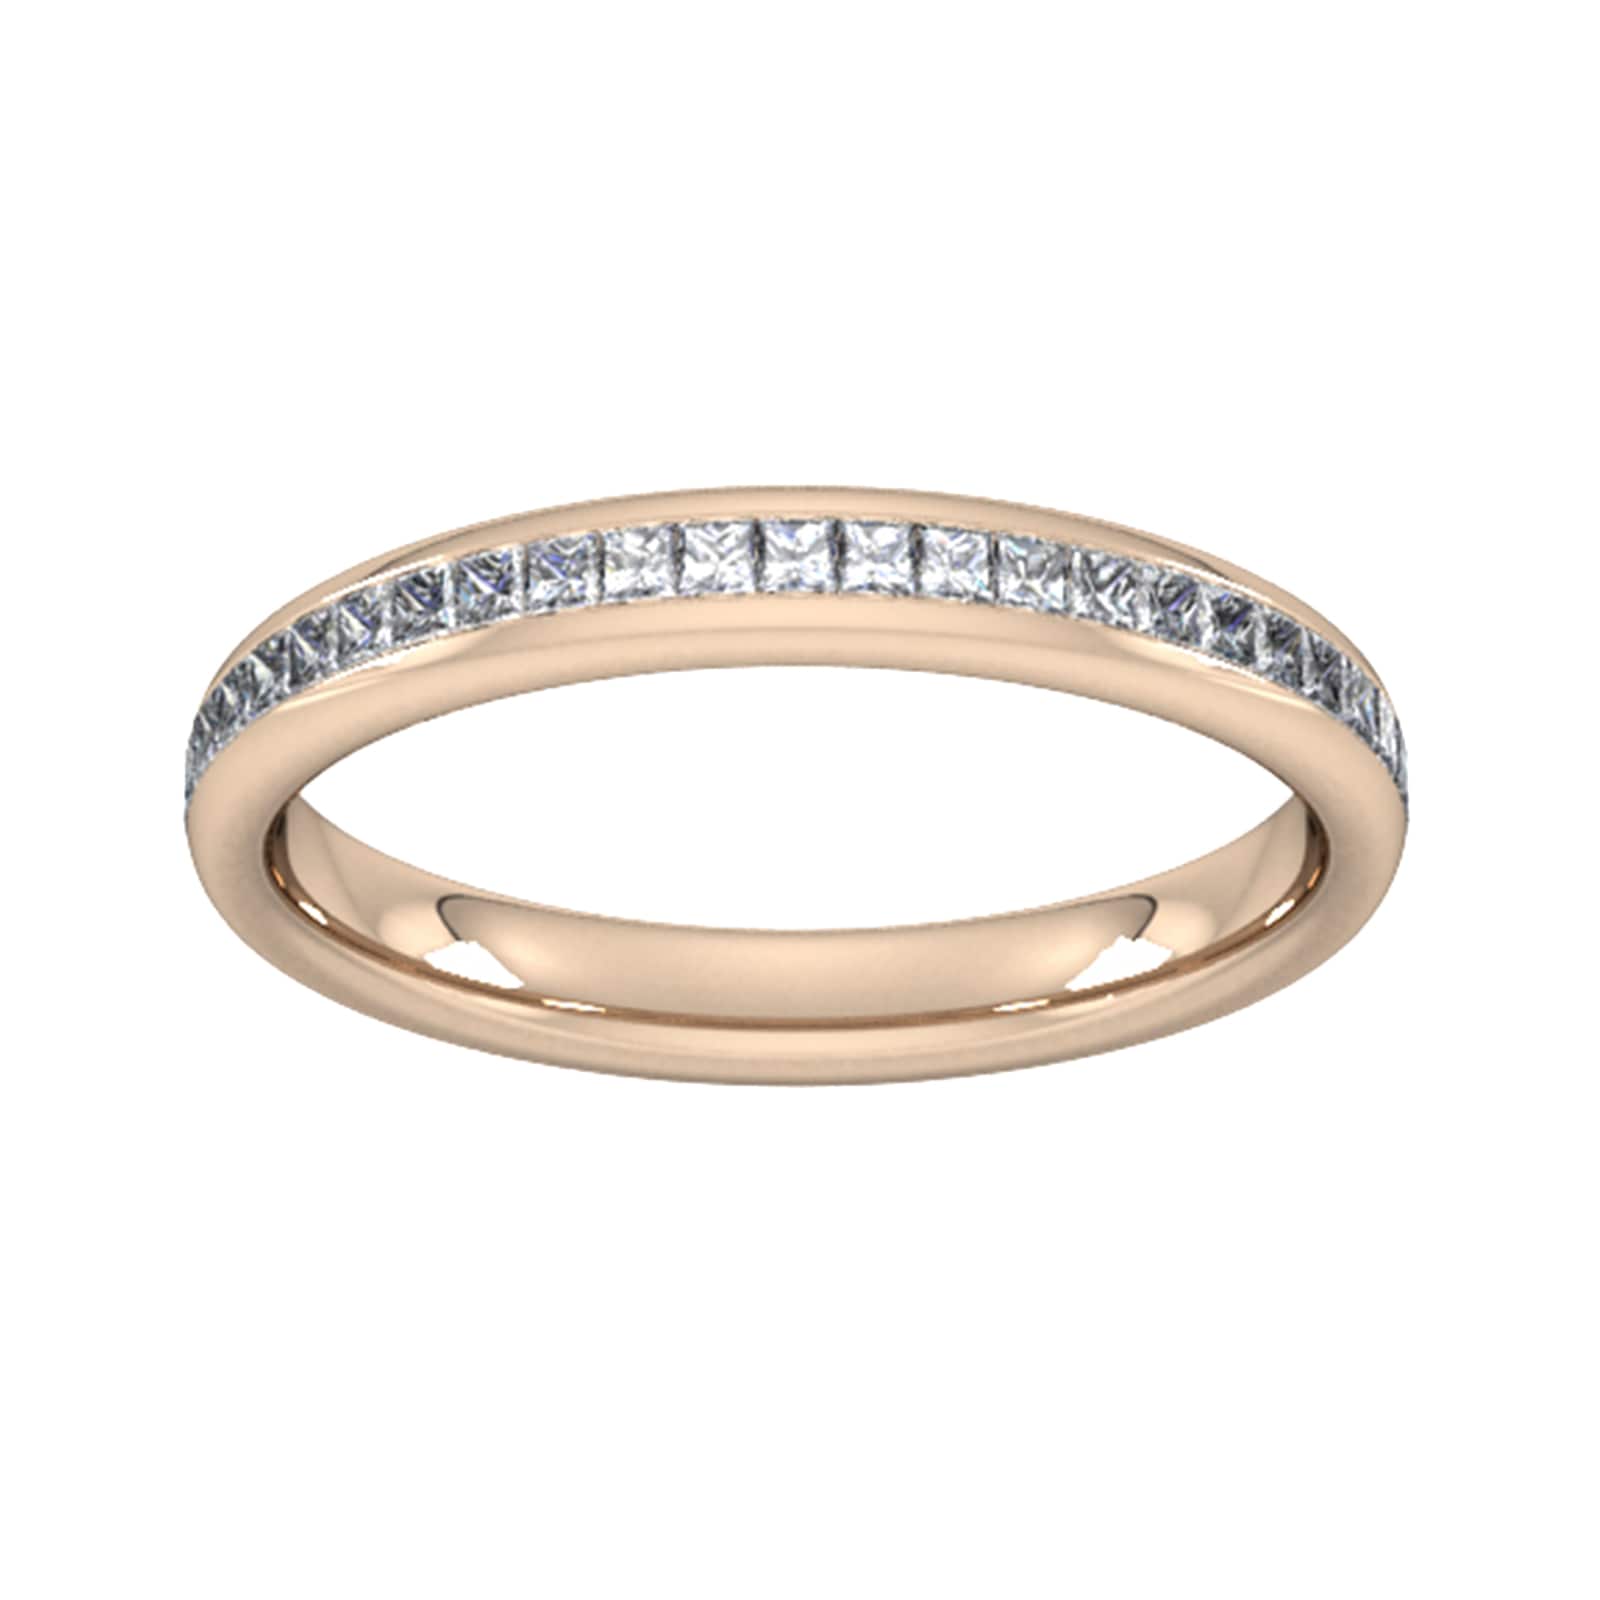 0.34 Carat Total Weight Princess Cut Channel Set Wedding Ring In 9 Carat Rose Gold - Ring Size P